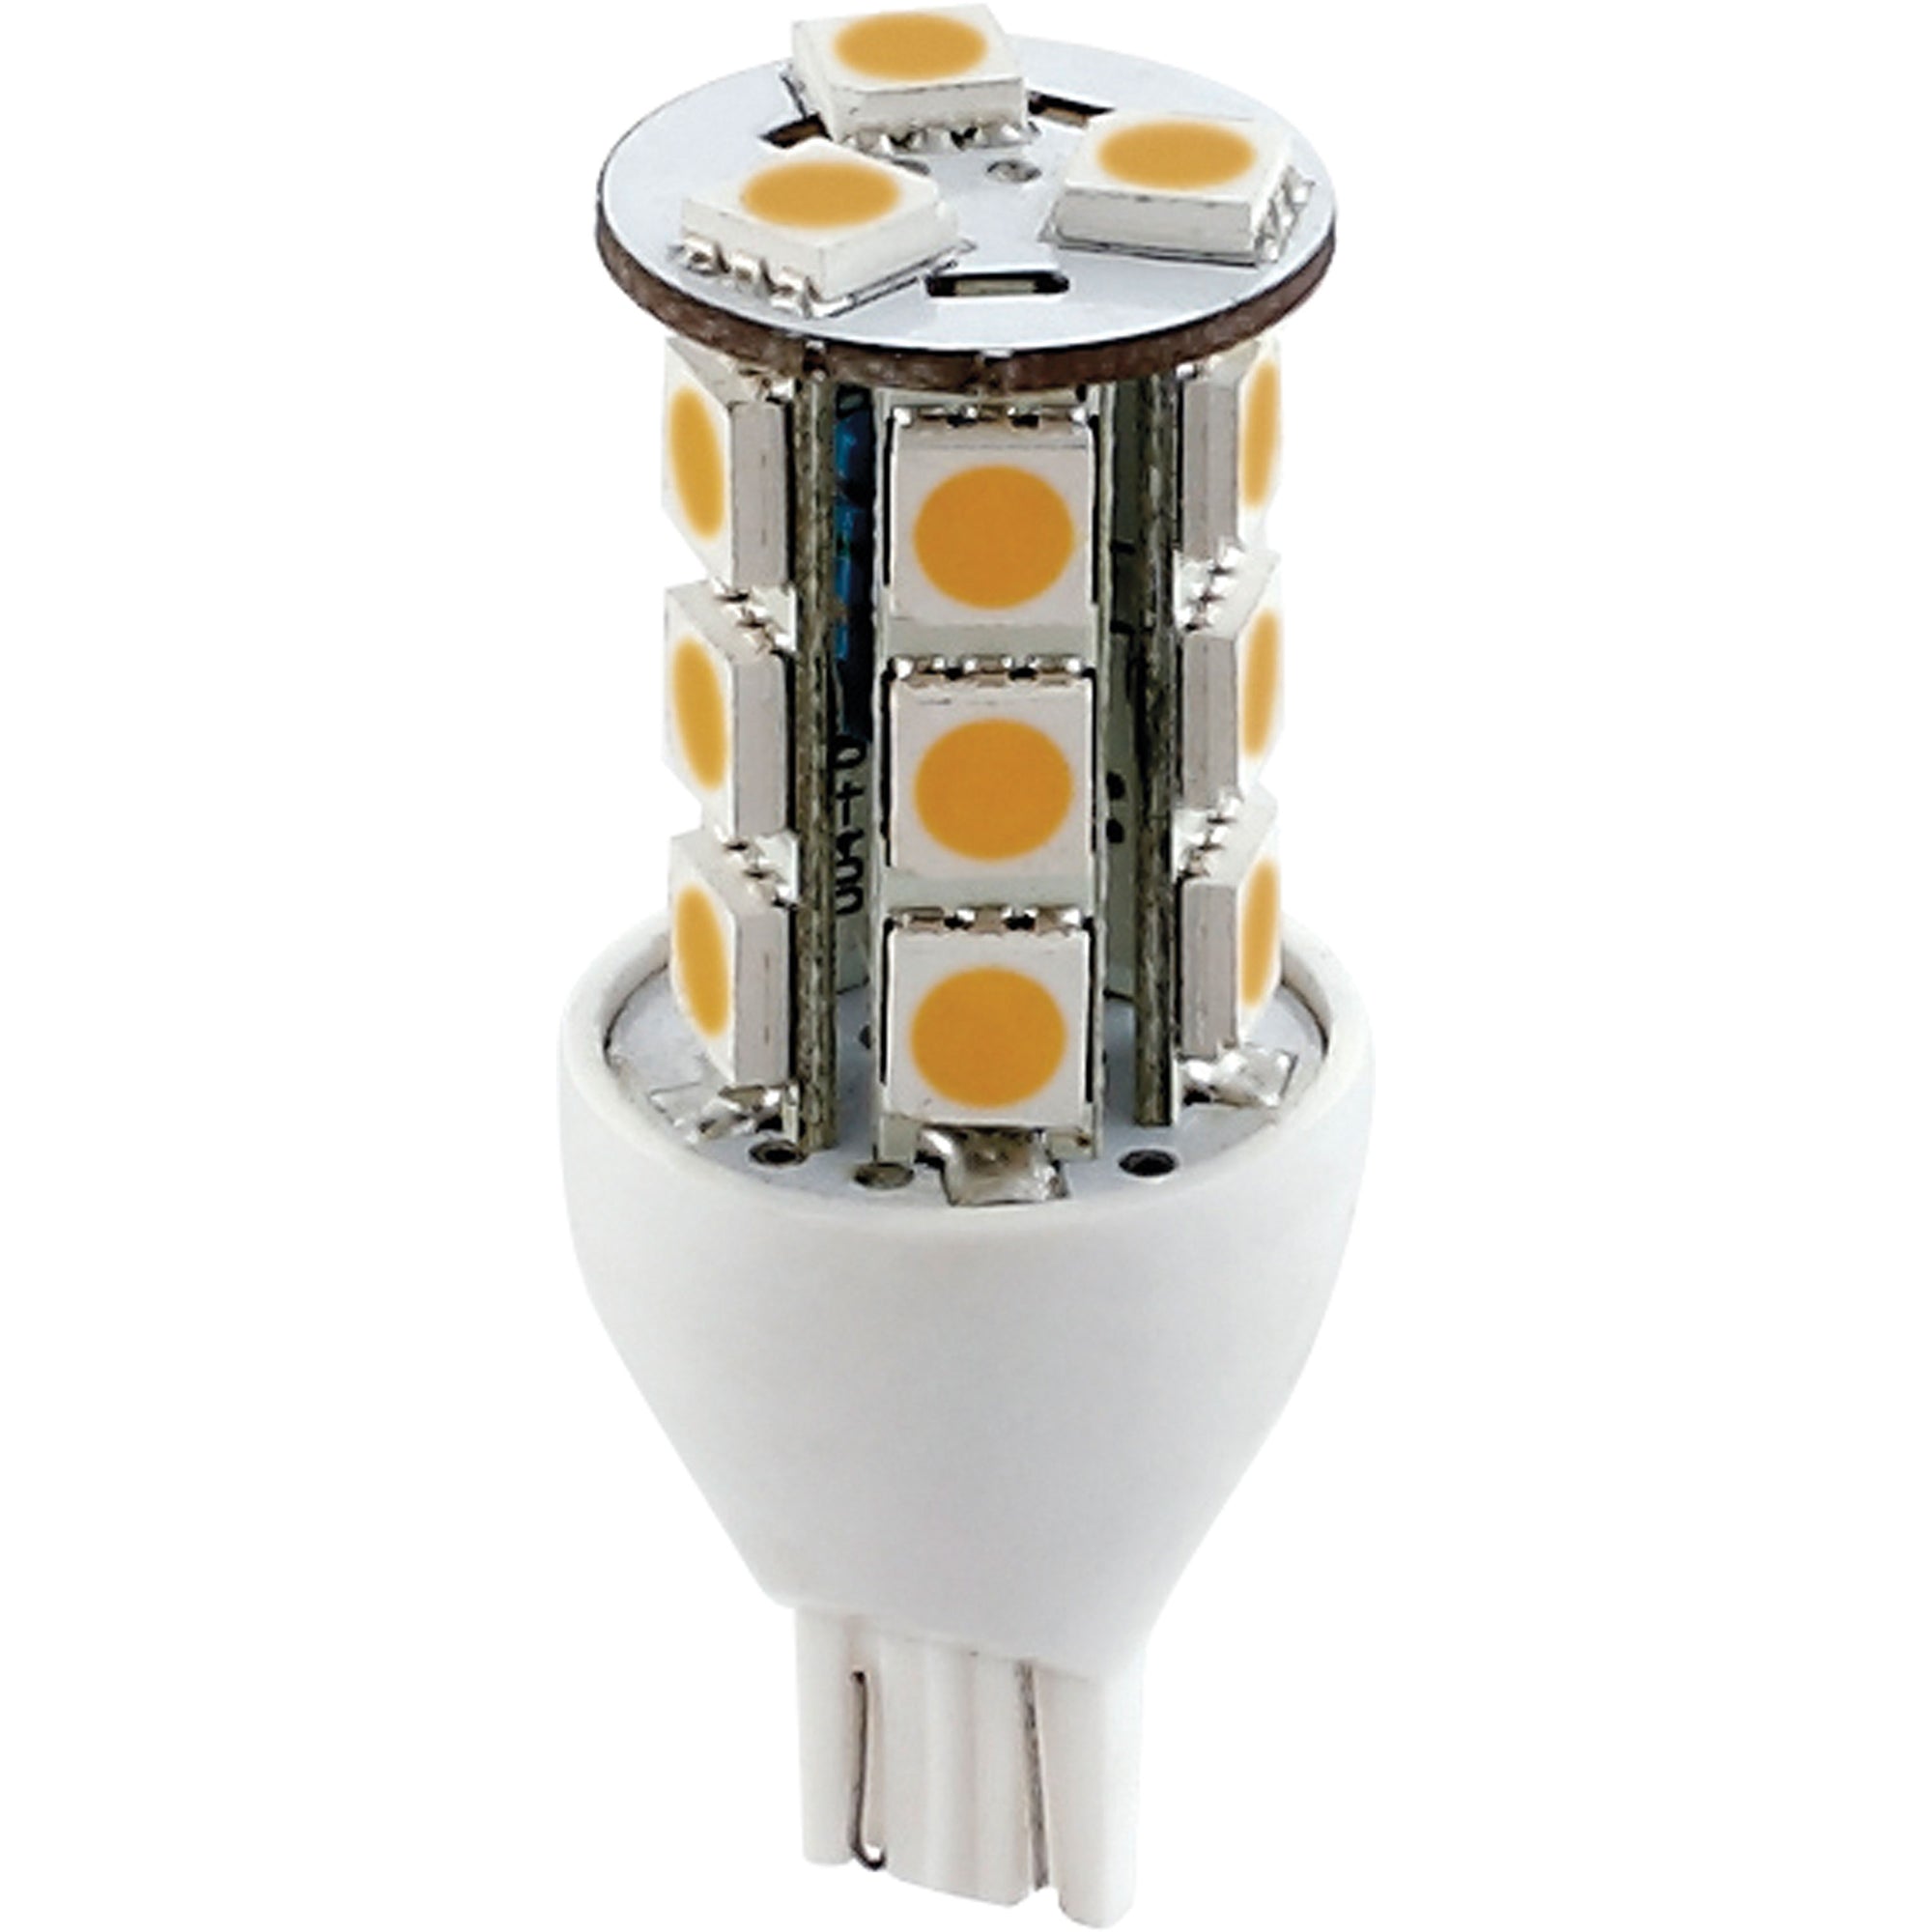 Ming's Mark 5050129 12V Green LongLife LED Light Bulb Tower with 921/T15 Wedge Base - 200 Lumens, Warm White